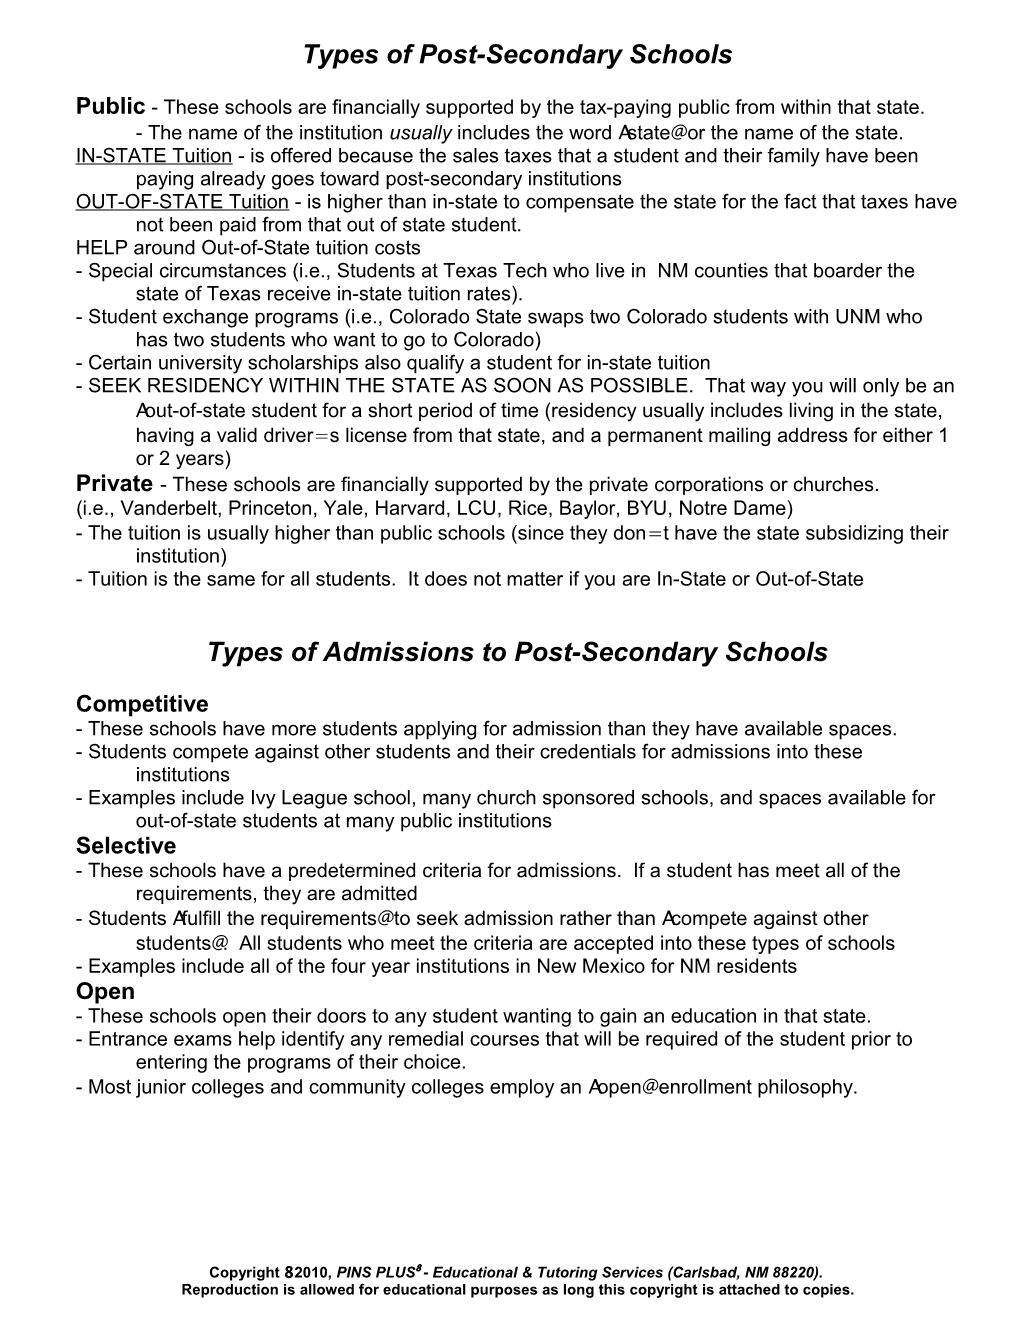 Types of Post-Secondary Schools